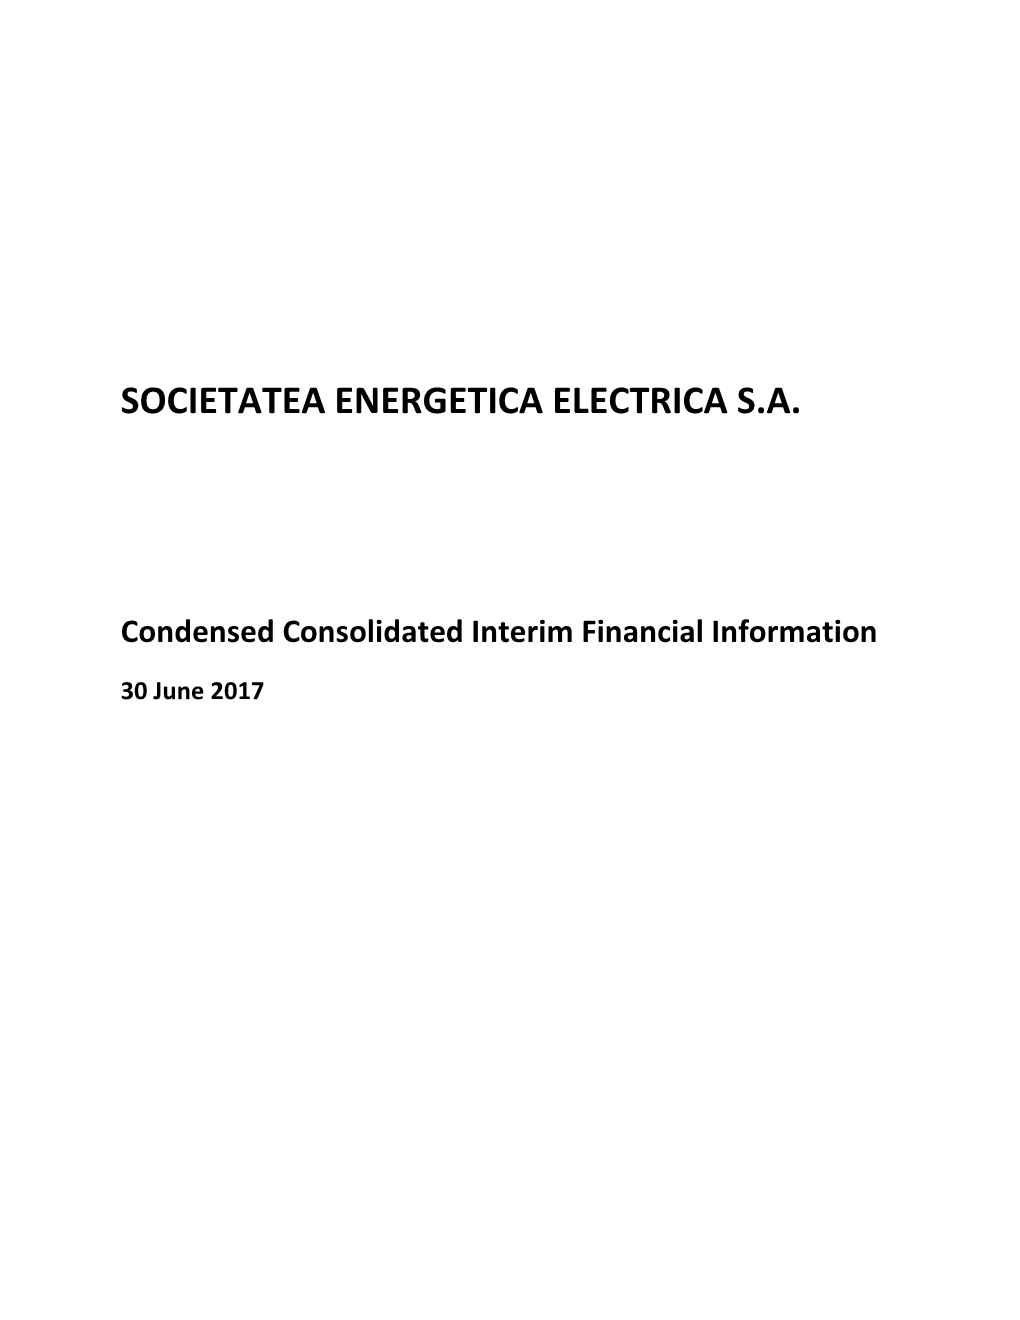 Societatea Energetica Electrica S.A